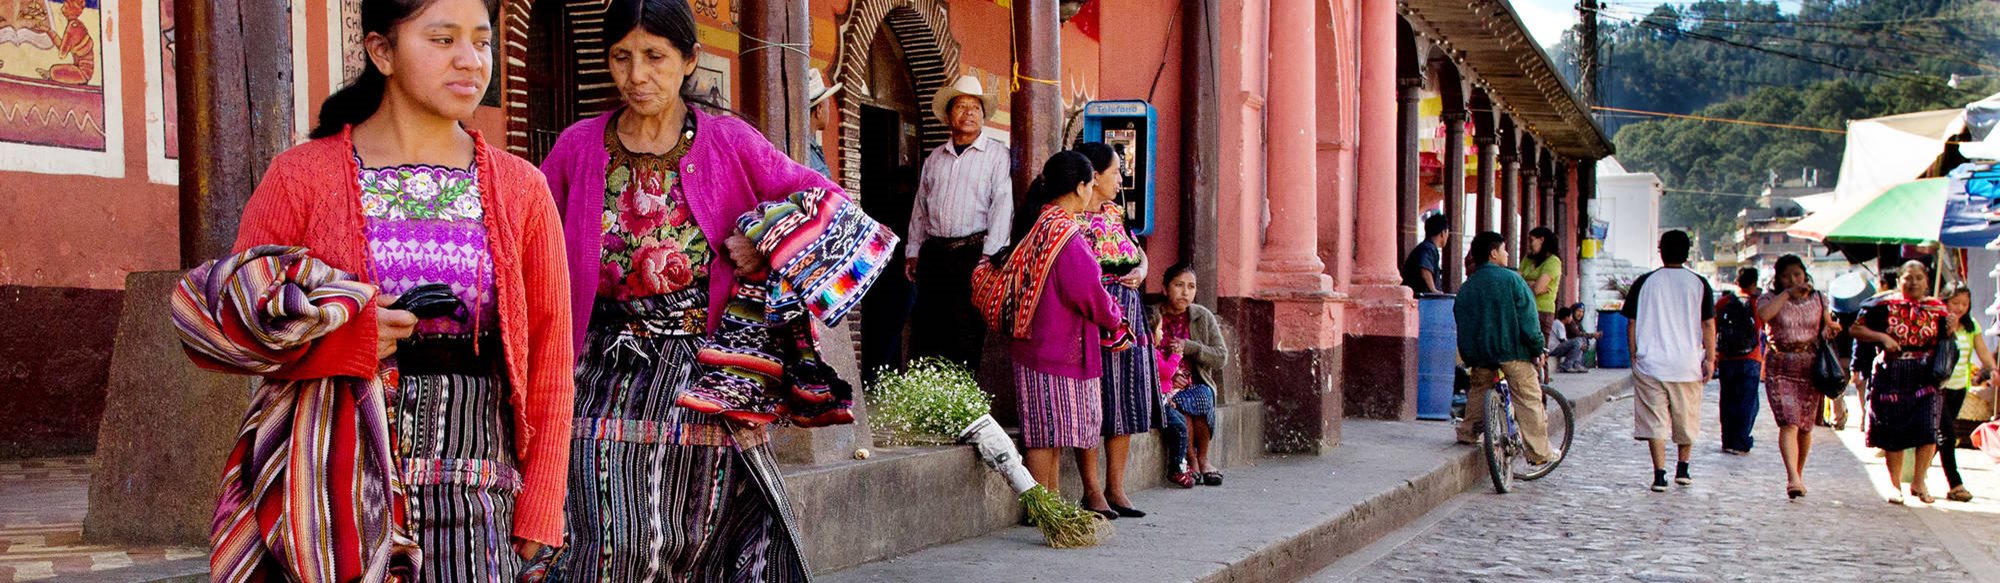 dating tradisjoner Guatemala